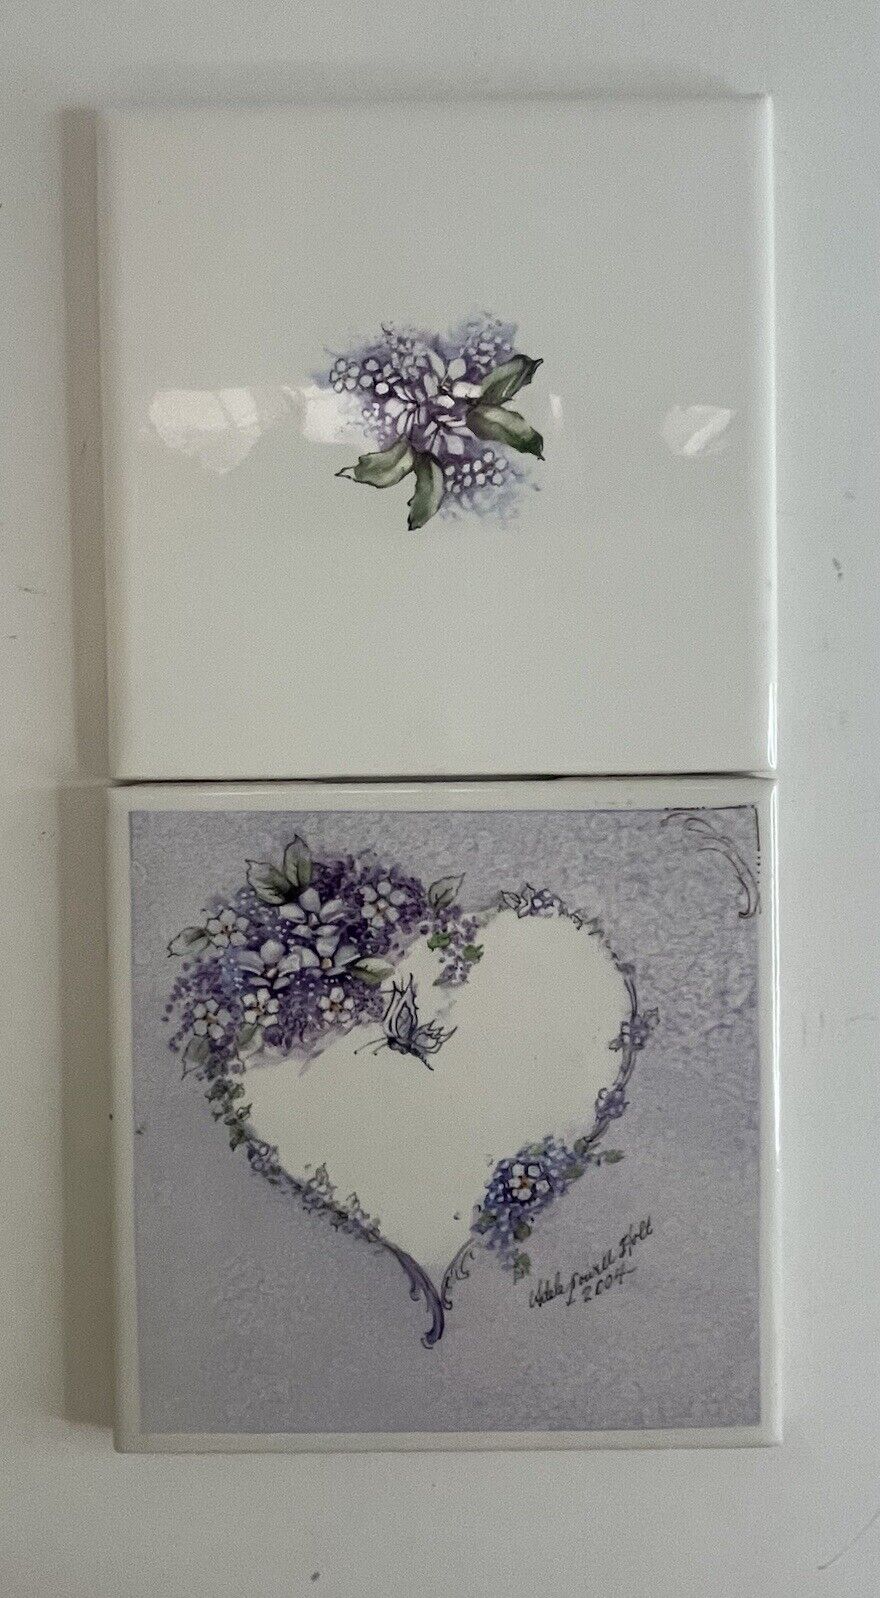 2 Original Hand painted Porcelain Tiles, Purple Flowers And Heart. Adele Holt